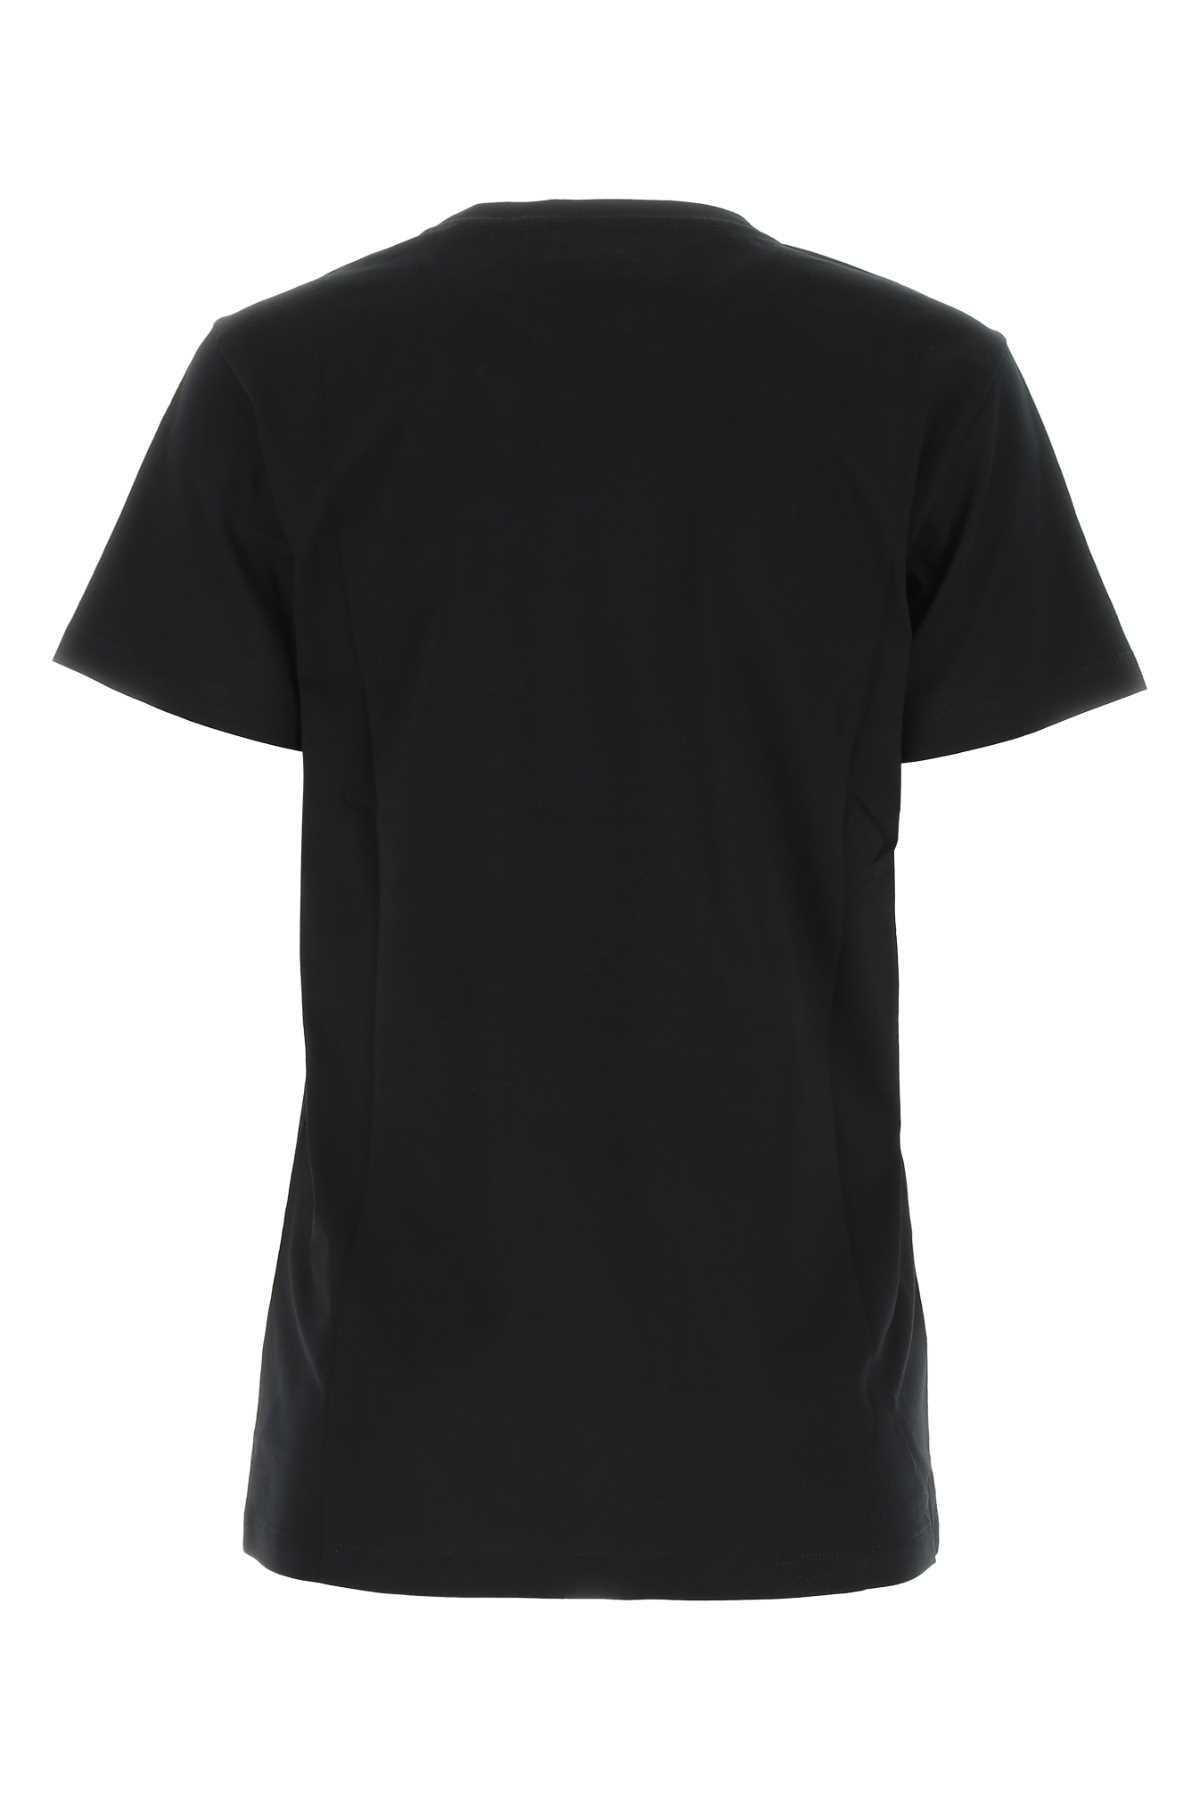 Marant Etoile Black Cotton Aby T-shirt